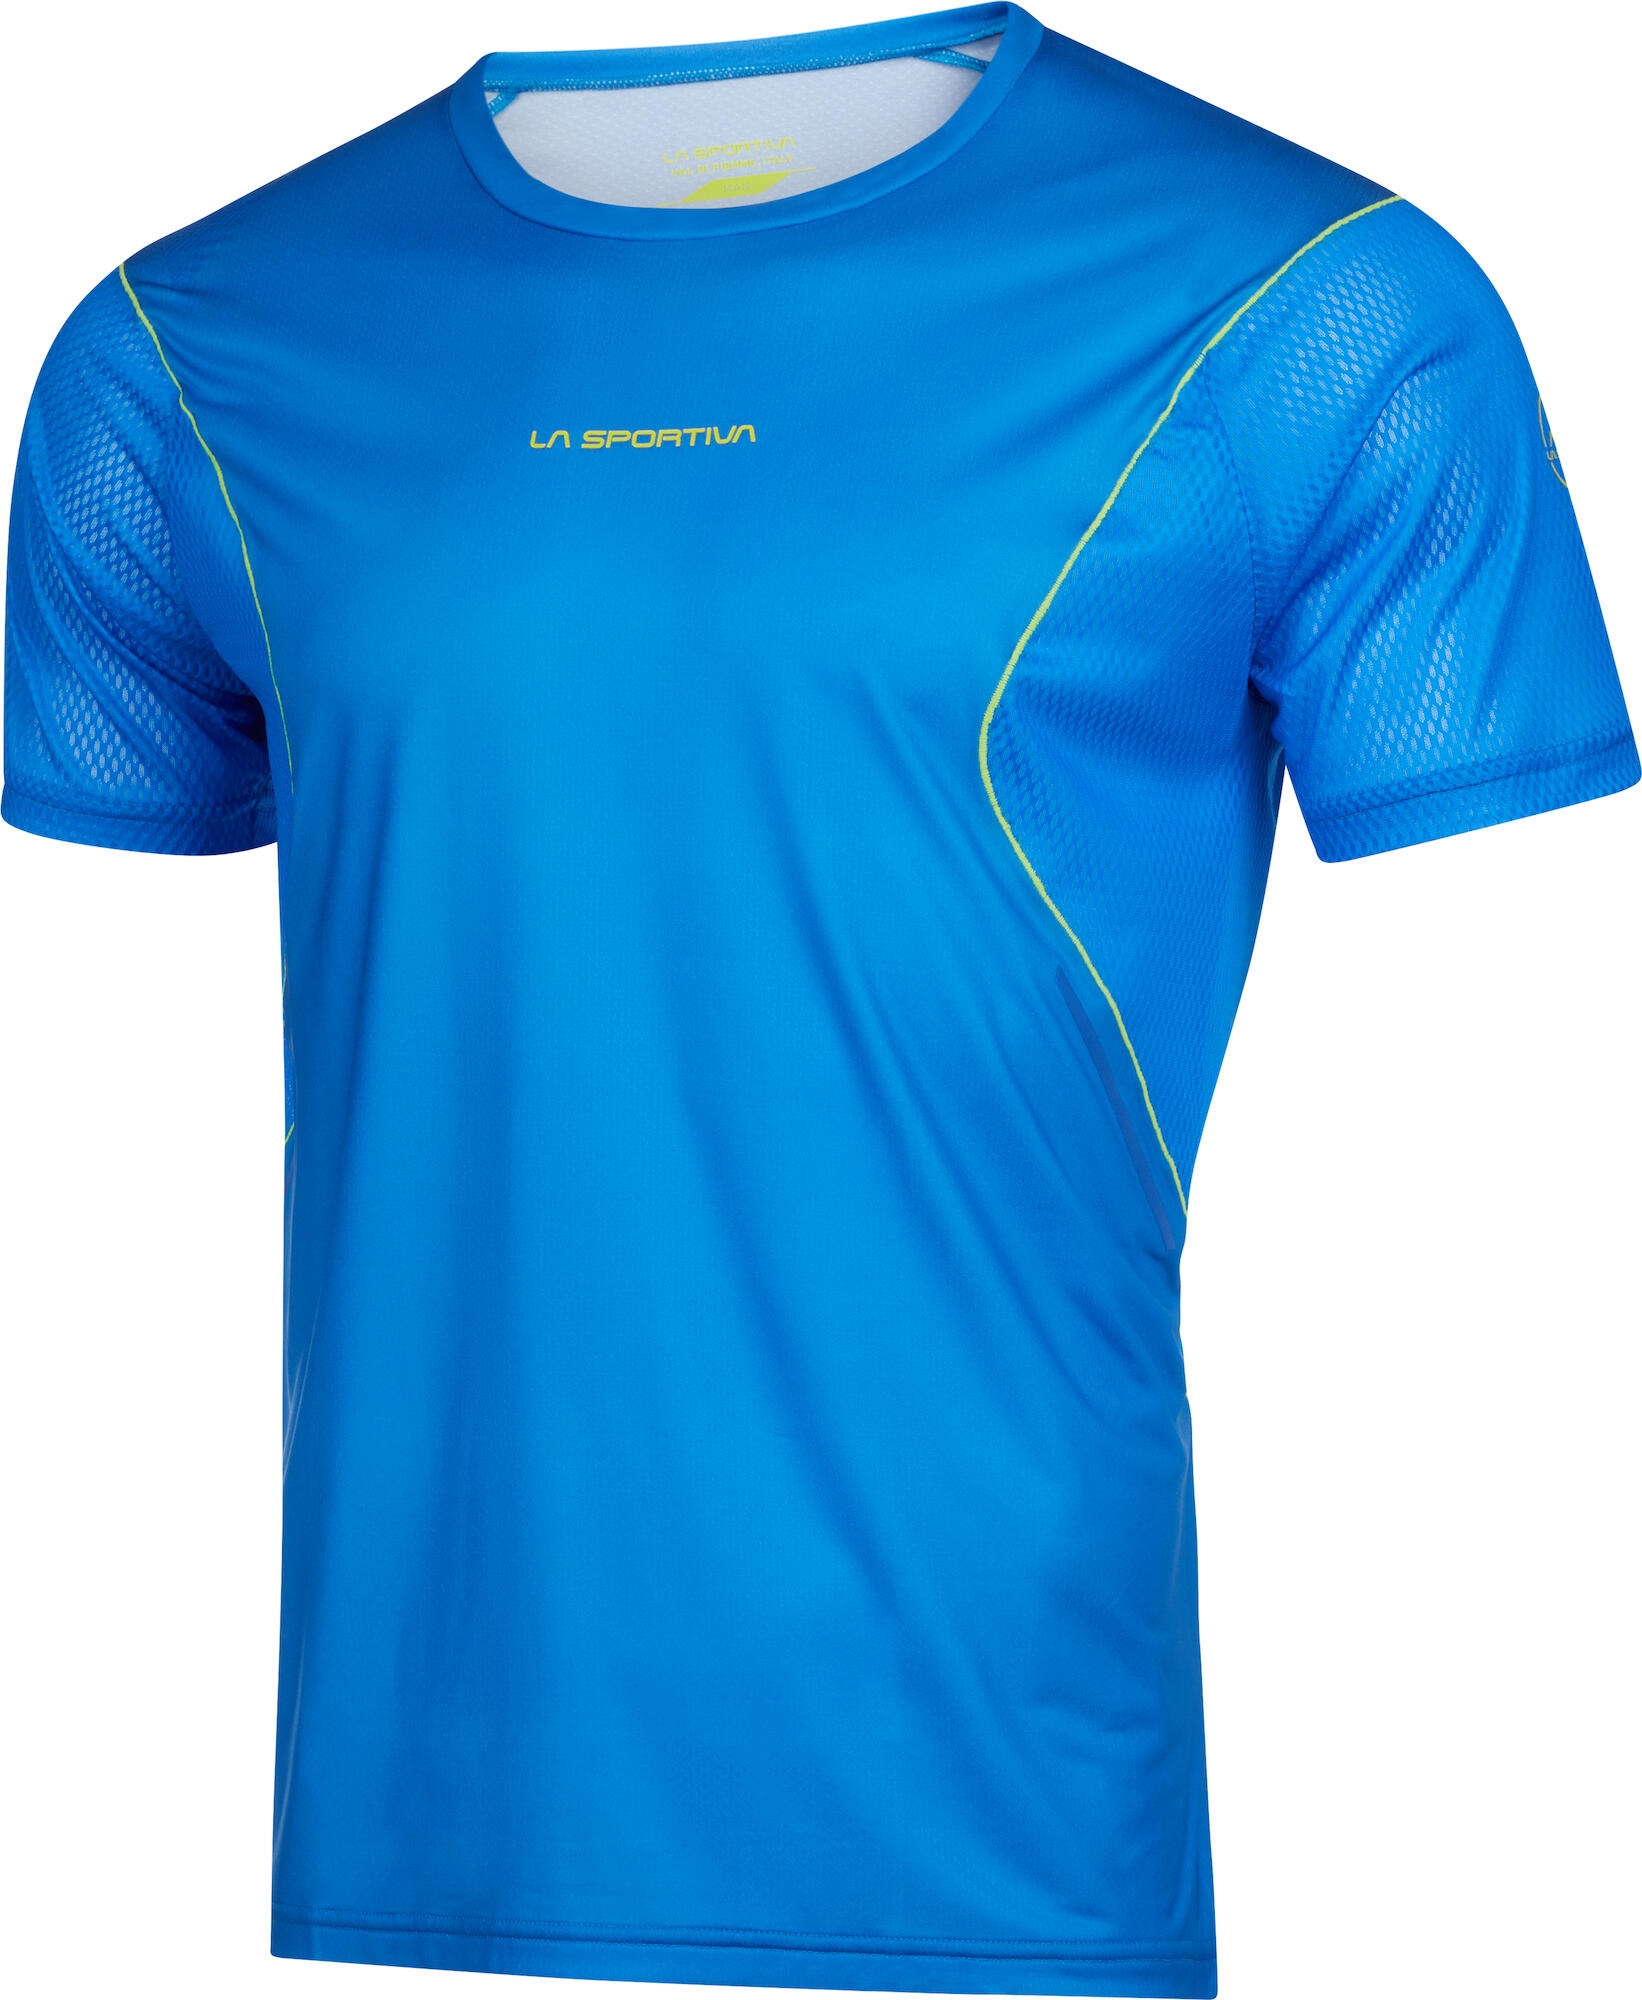 La Sportiva Resolute T-shirt Men electric blue (634634) XL